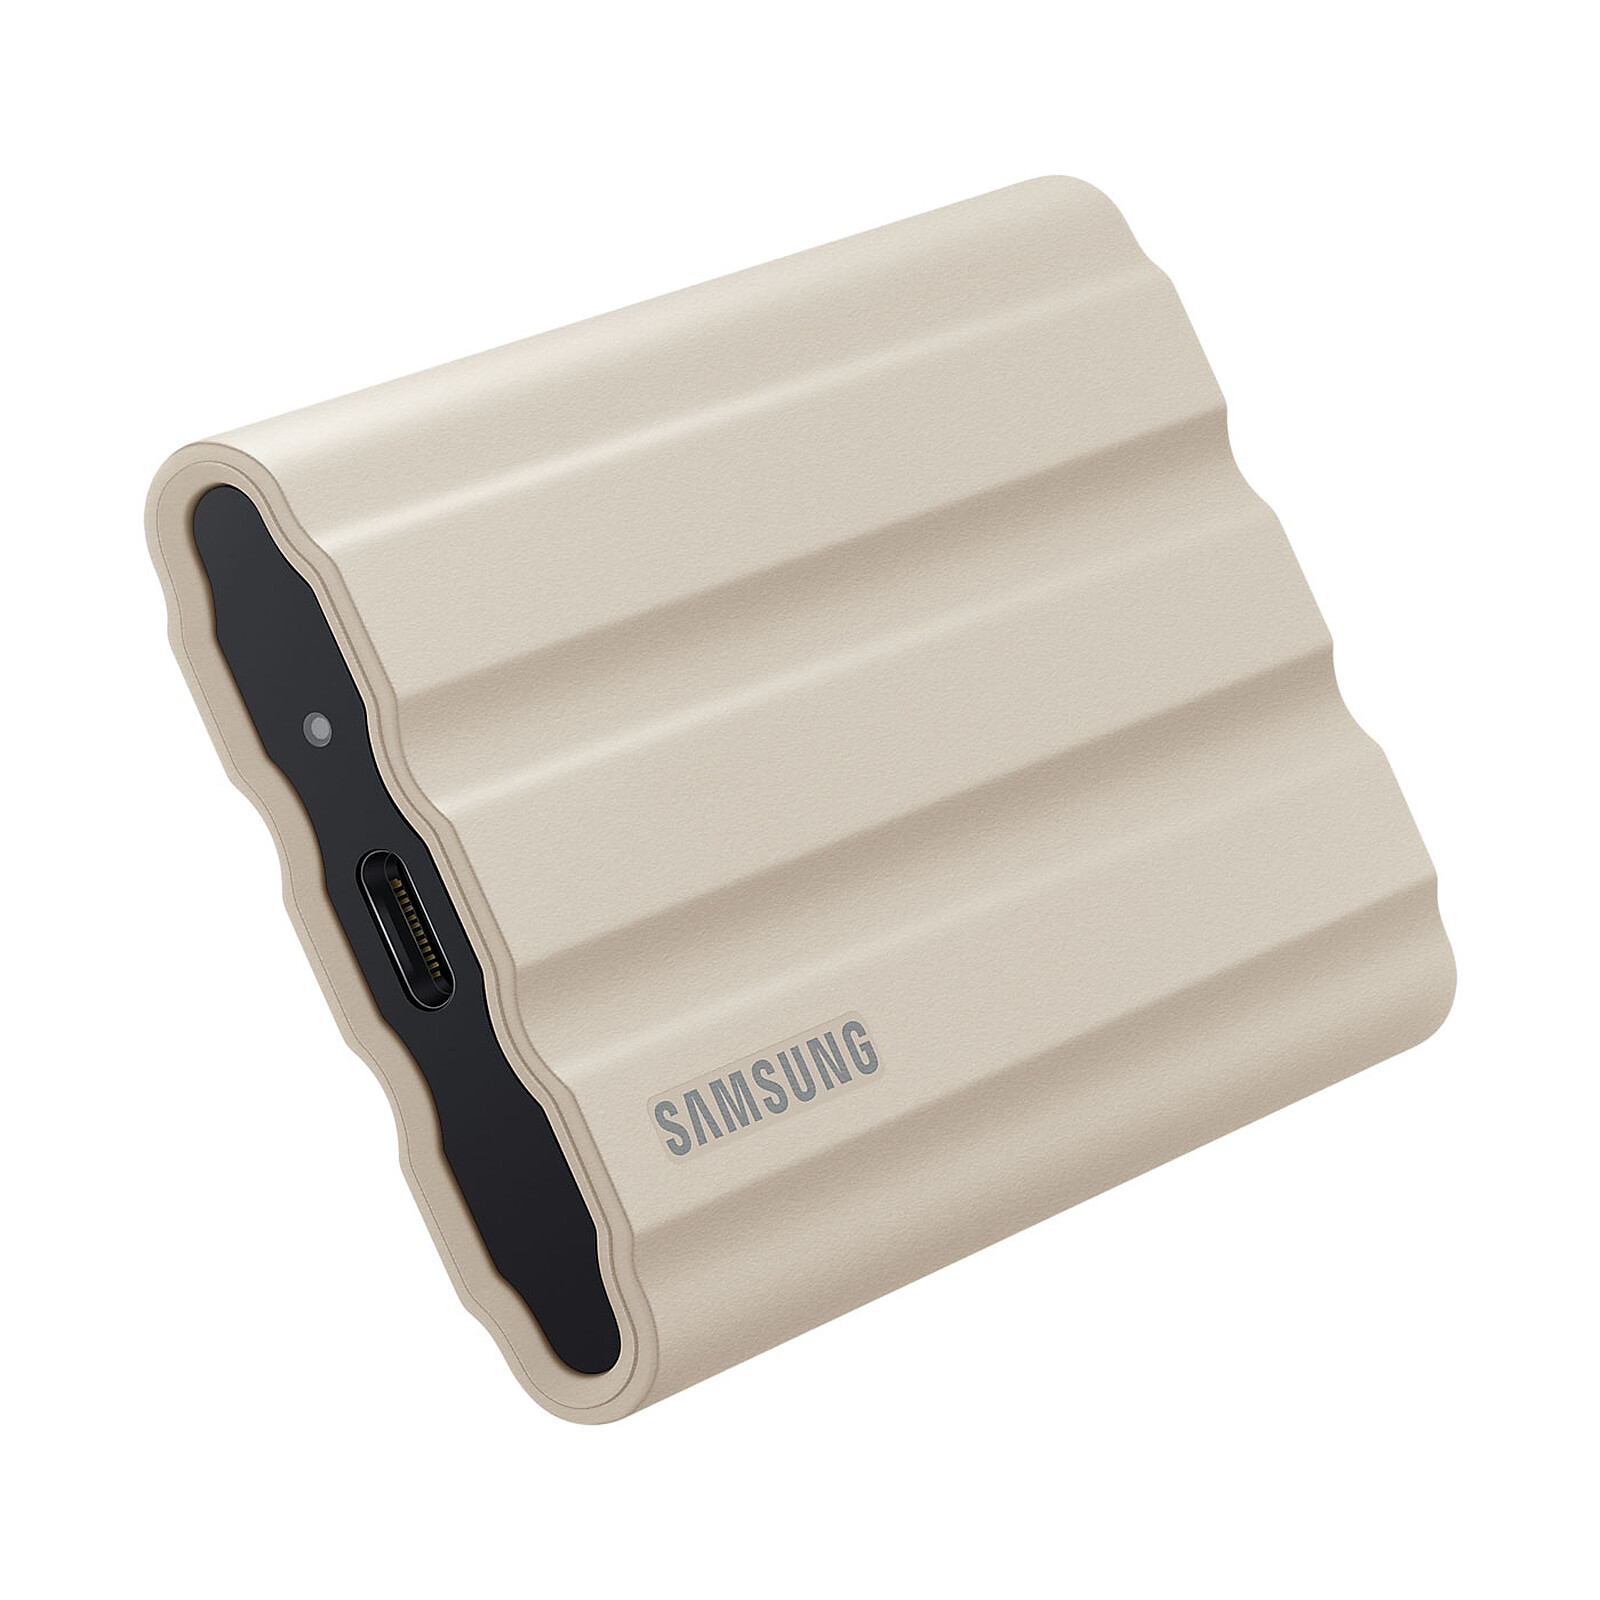 Disque dur portable externe SAMSUNG Portable SSD T7 Shield 1To USB